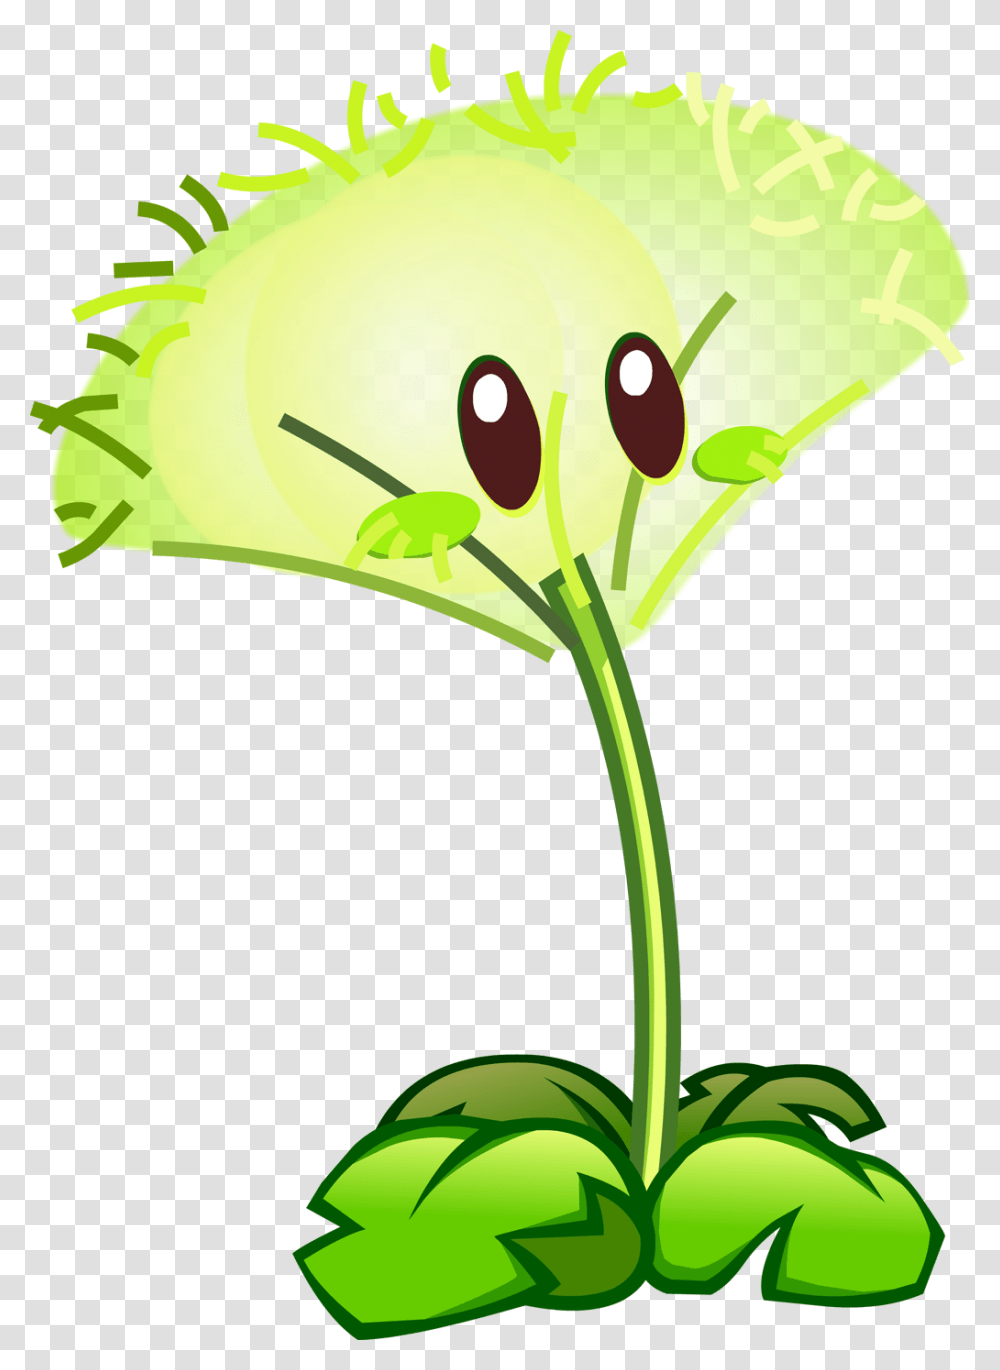 Plants Vs Zombies 2 Online Plantas, Flower, Green, Produce, Food Transparent Png